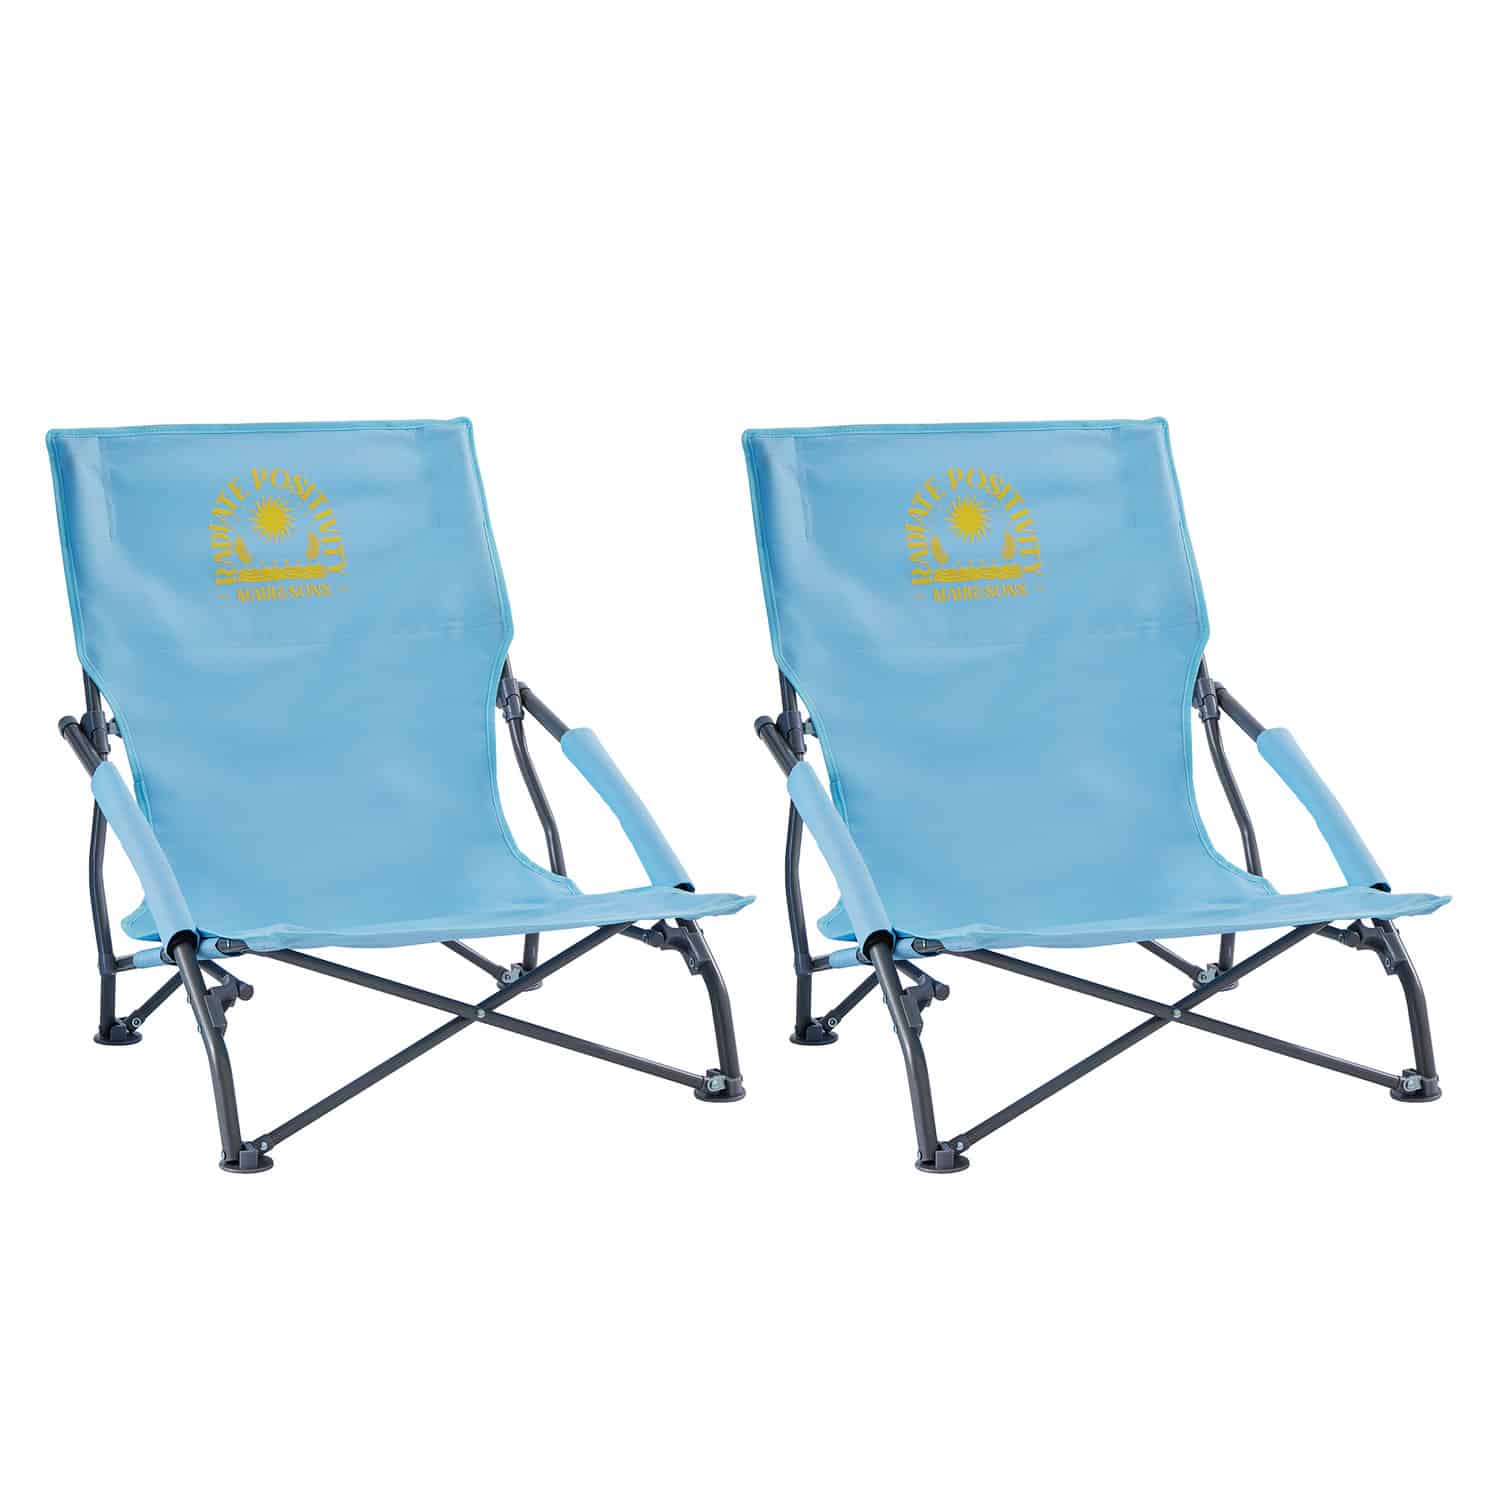 Sling Back Chair (Blue, 2 Pack)